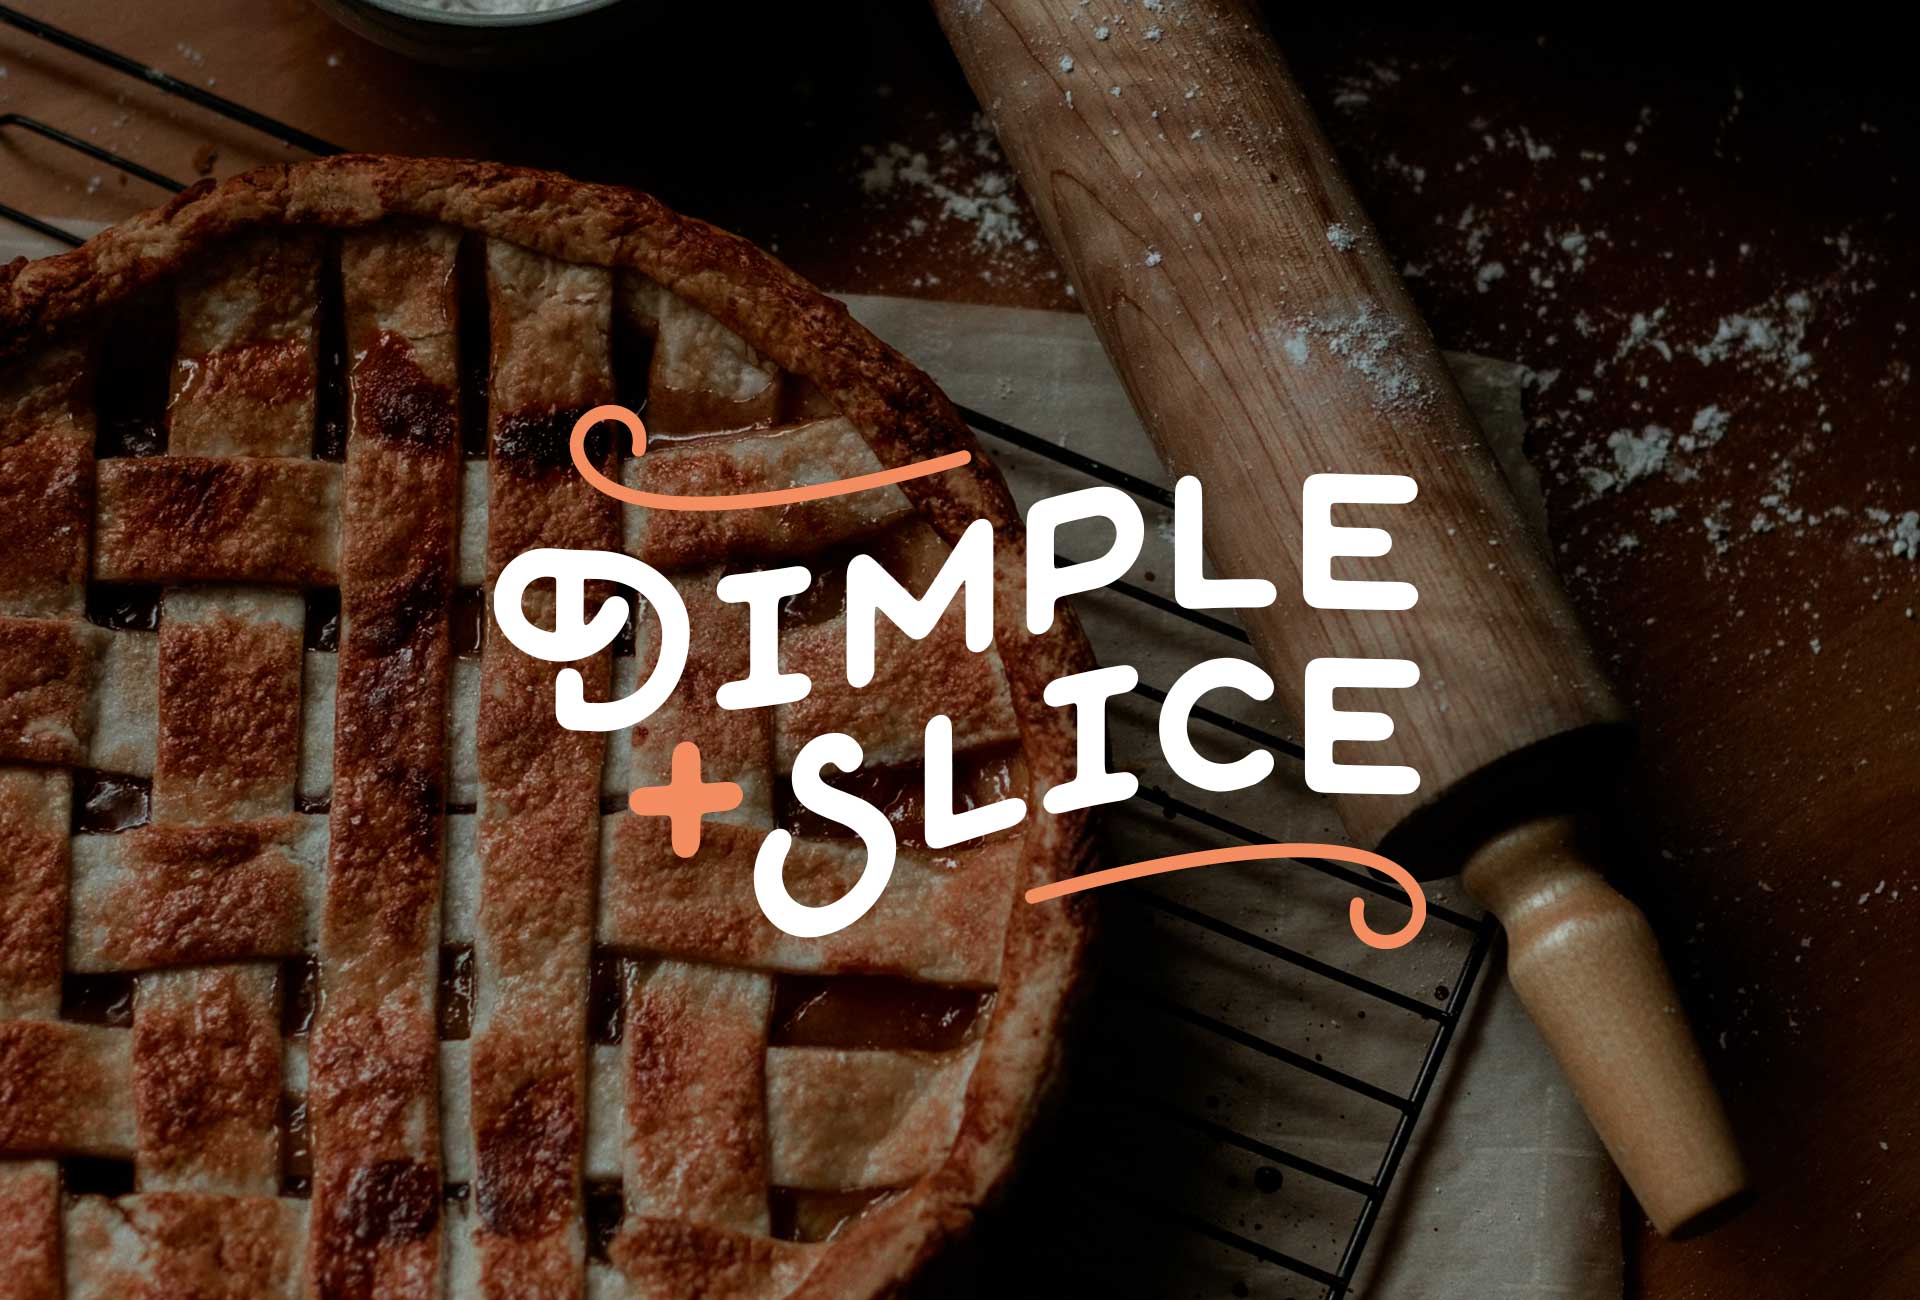 Dimple + Slice